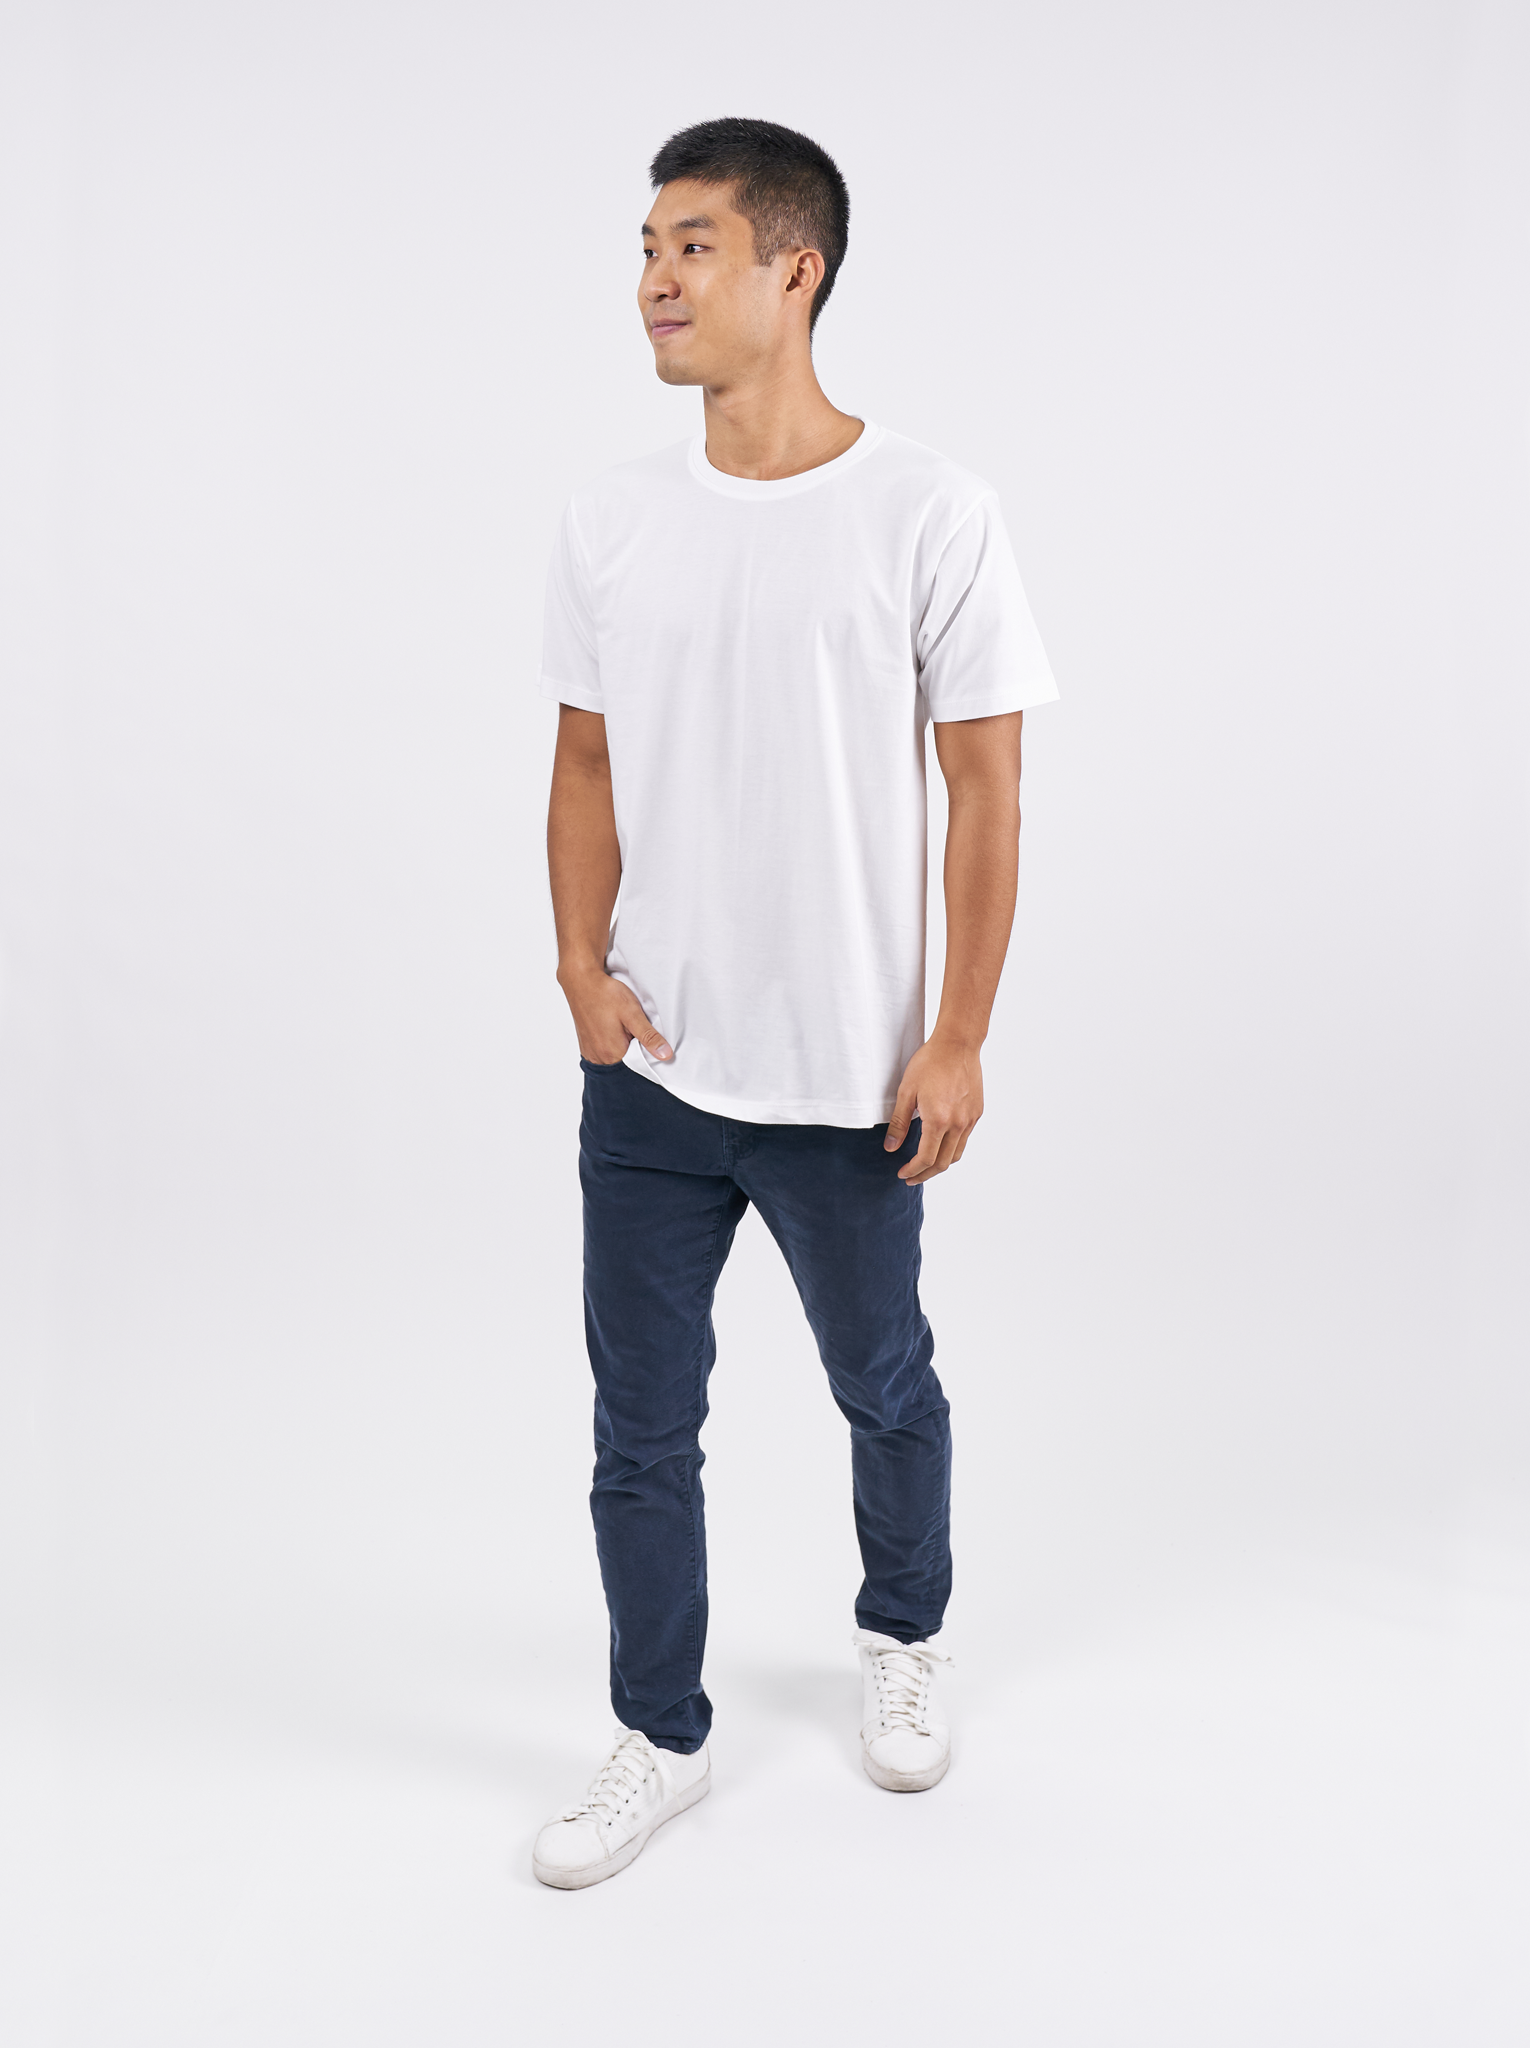 T-Shirt เสื้อยืด (White, สีขาว)(Unisex)